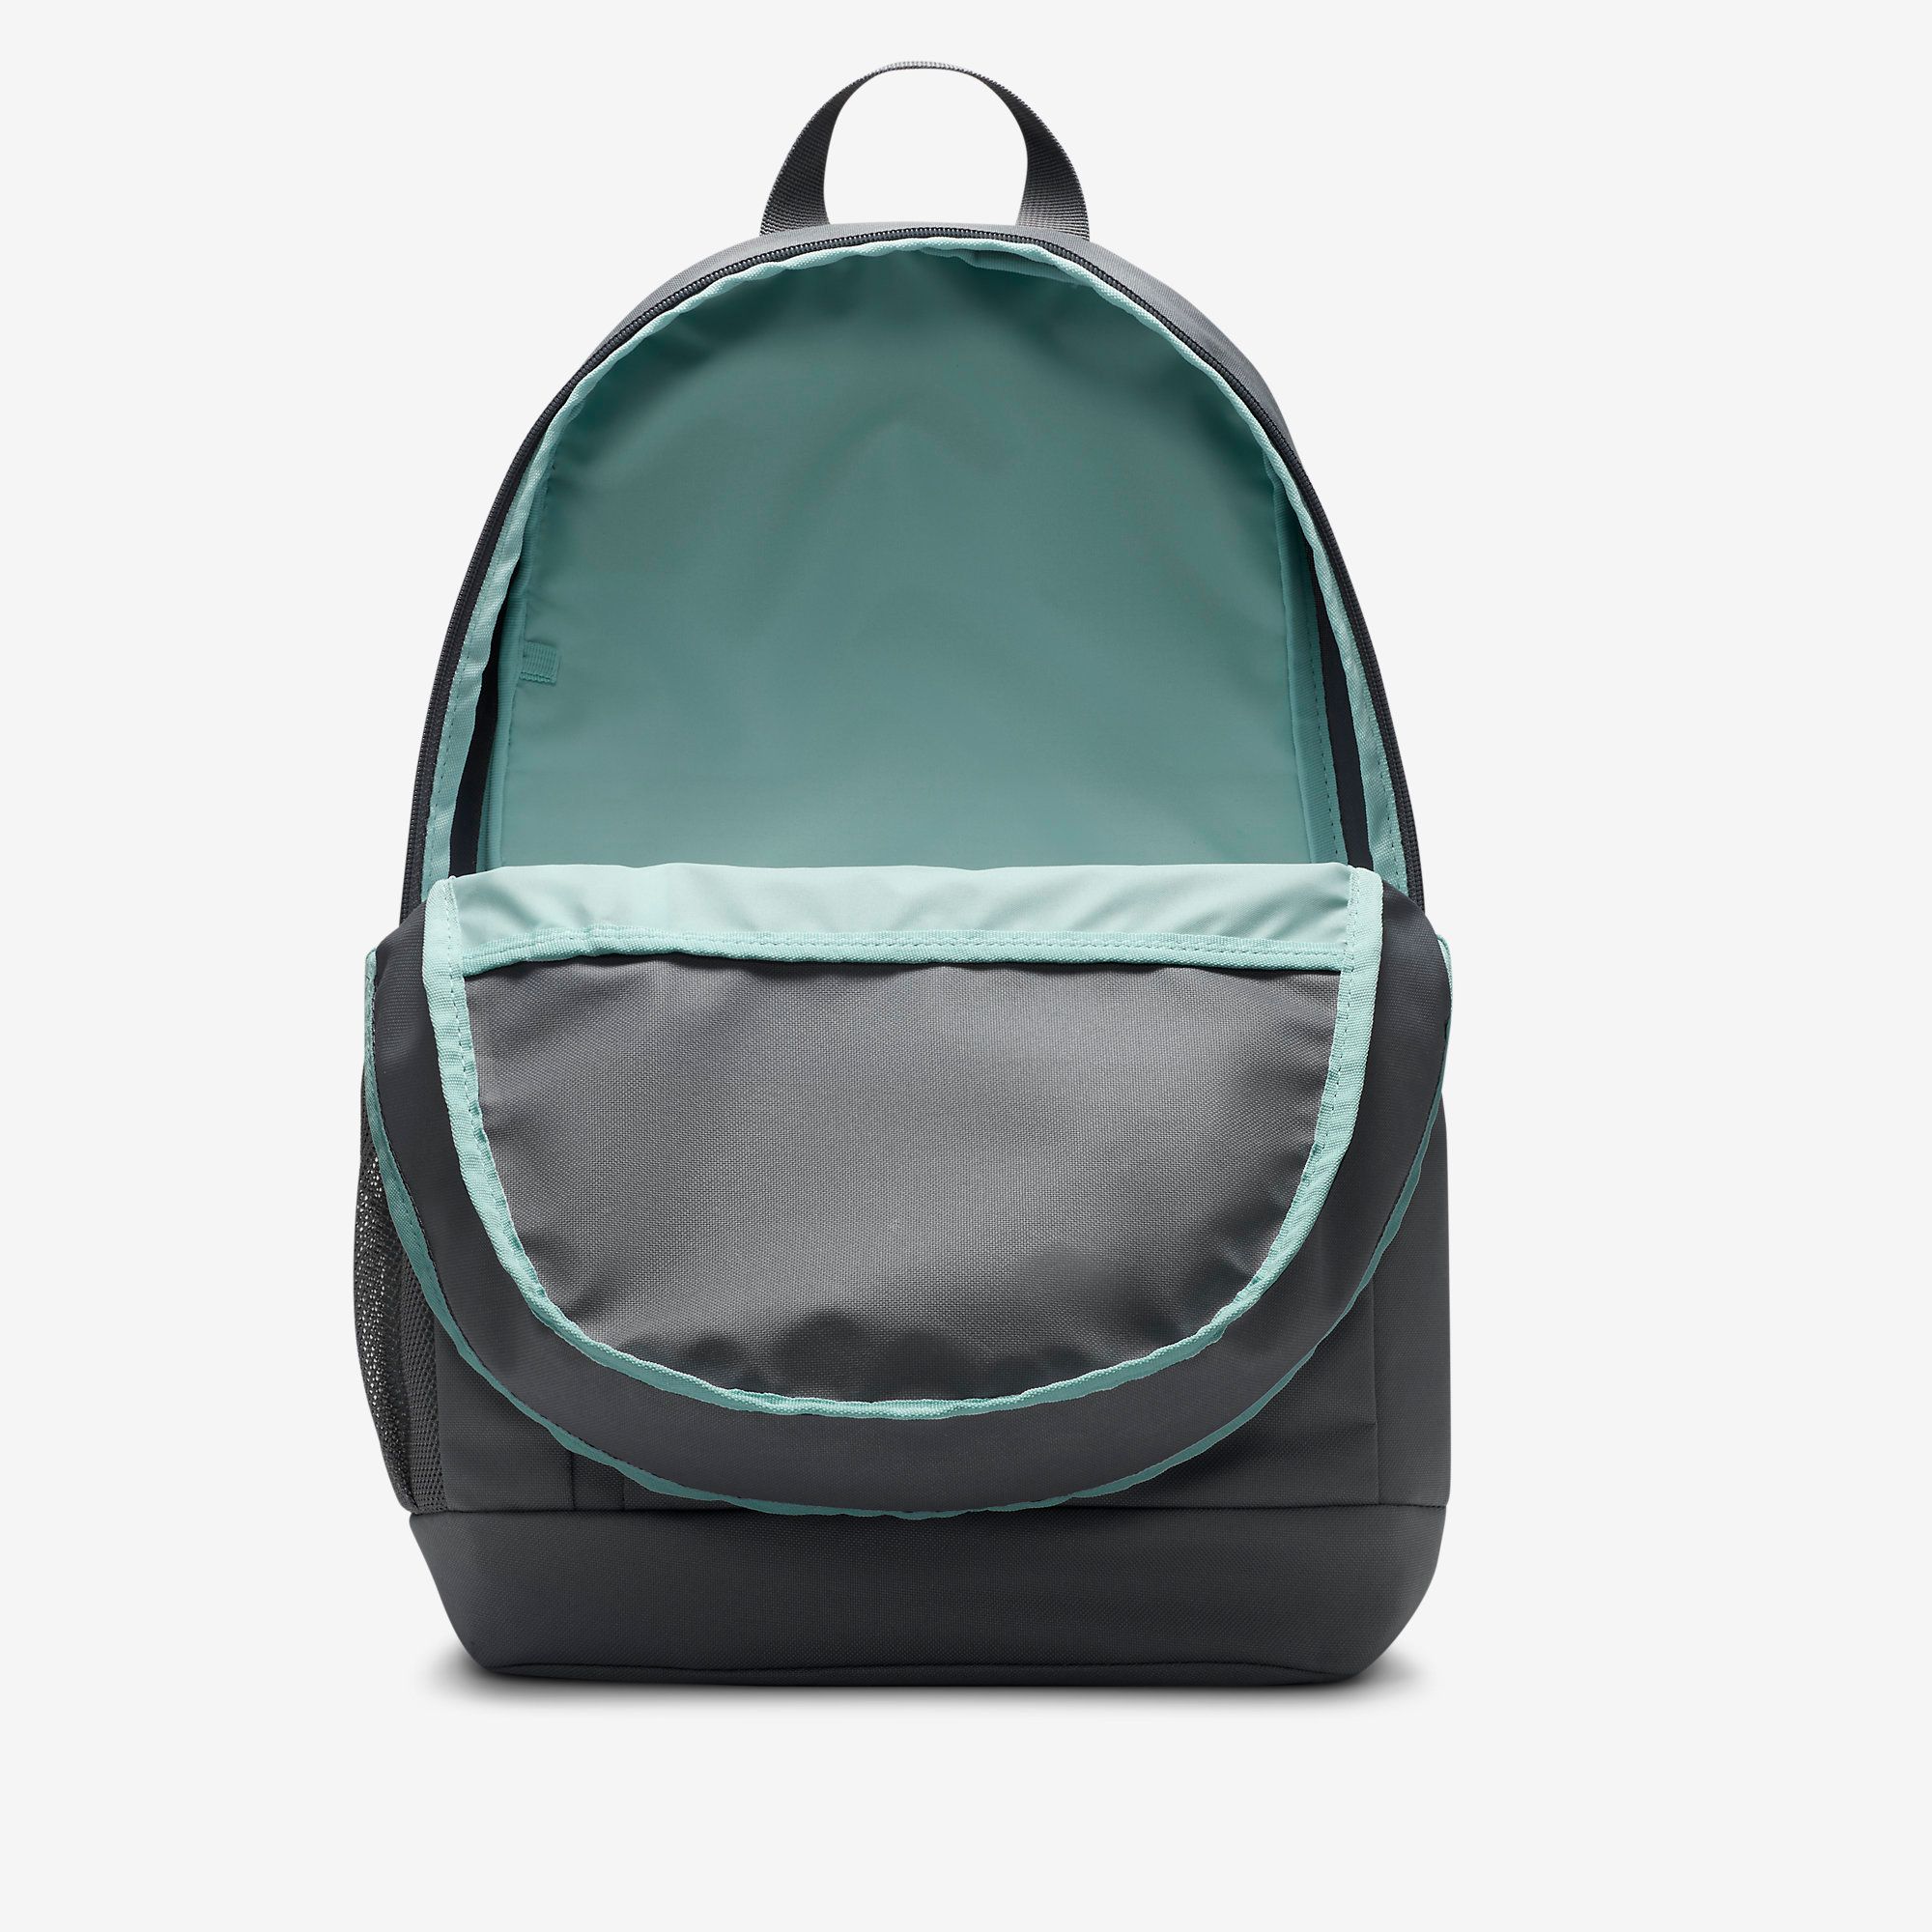  Nike Air Elemental Backpack - Grey 